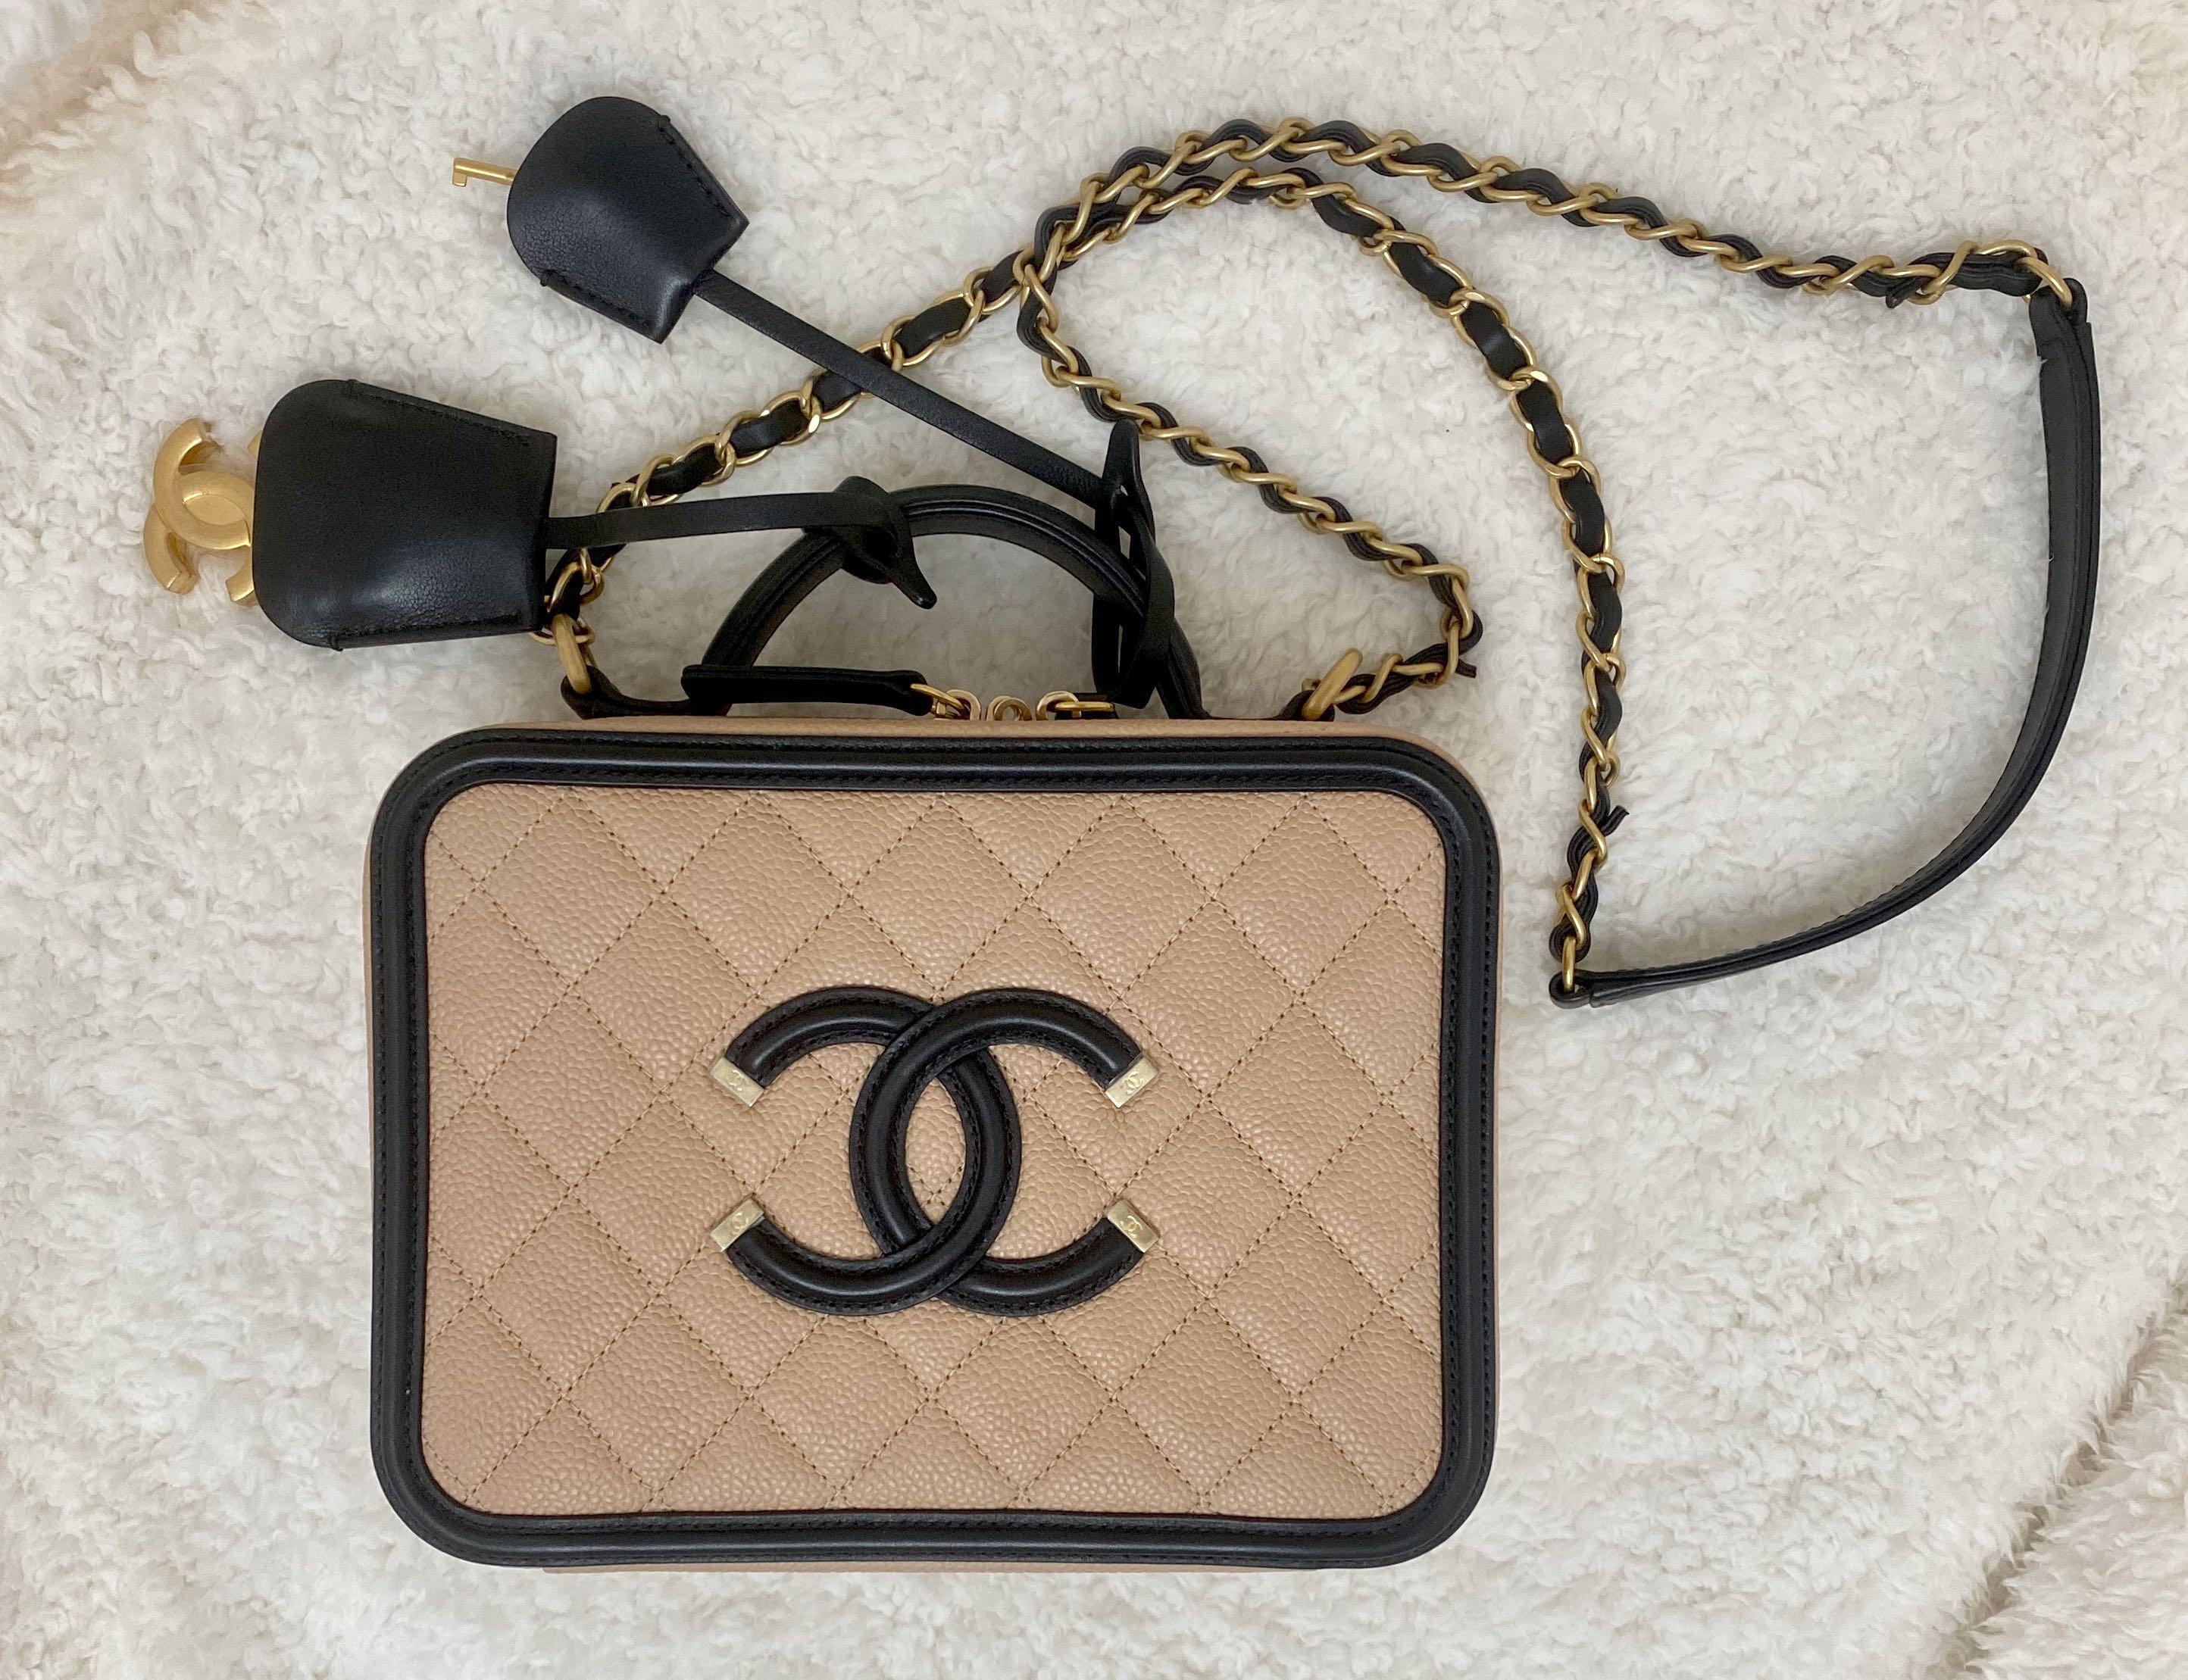 Authentic Chanel Medium Filigree Vanity Case Sling Bag in Beige